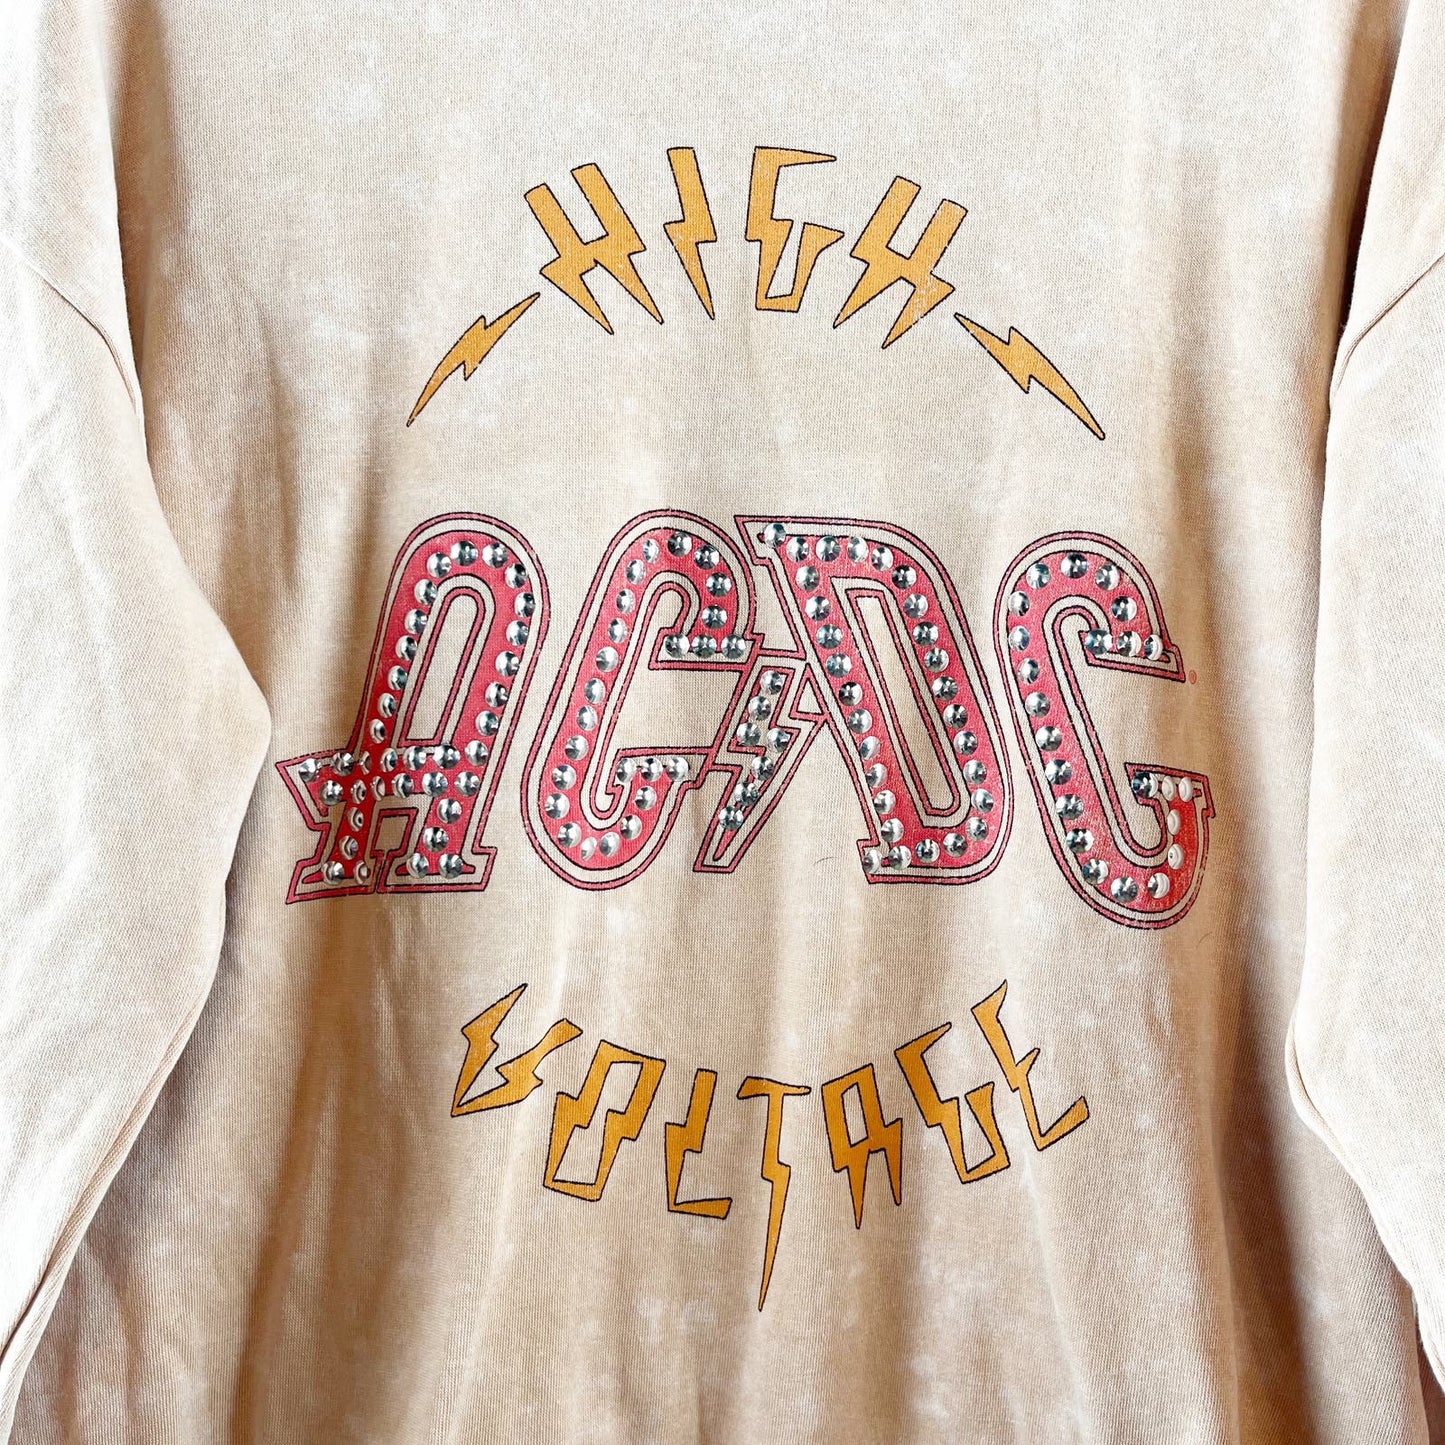 ACDC Crewneck Pullover Graphic Sweatshirt Tan Beige XL